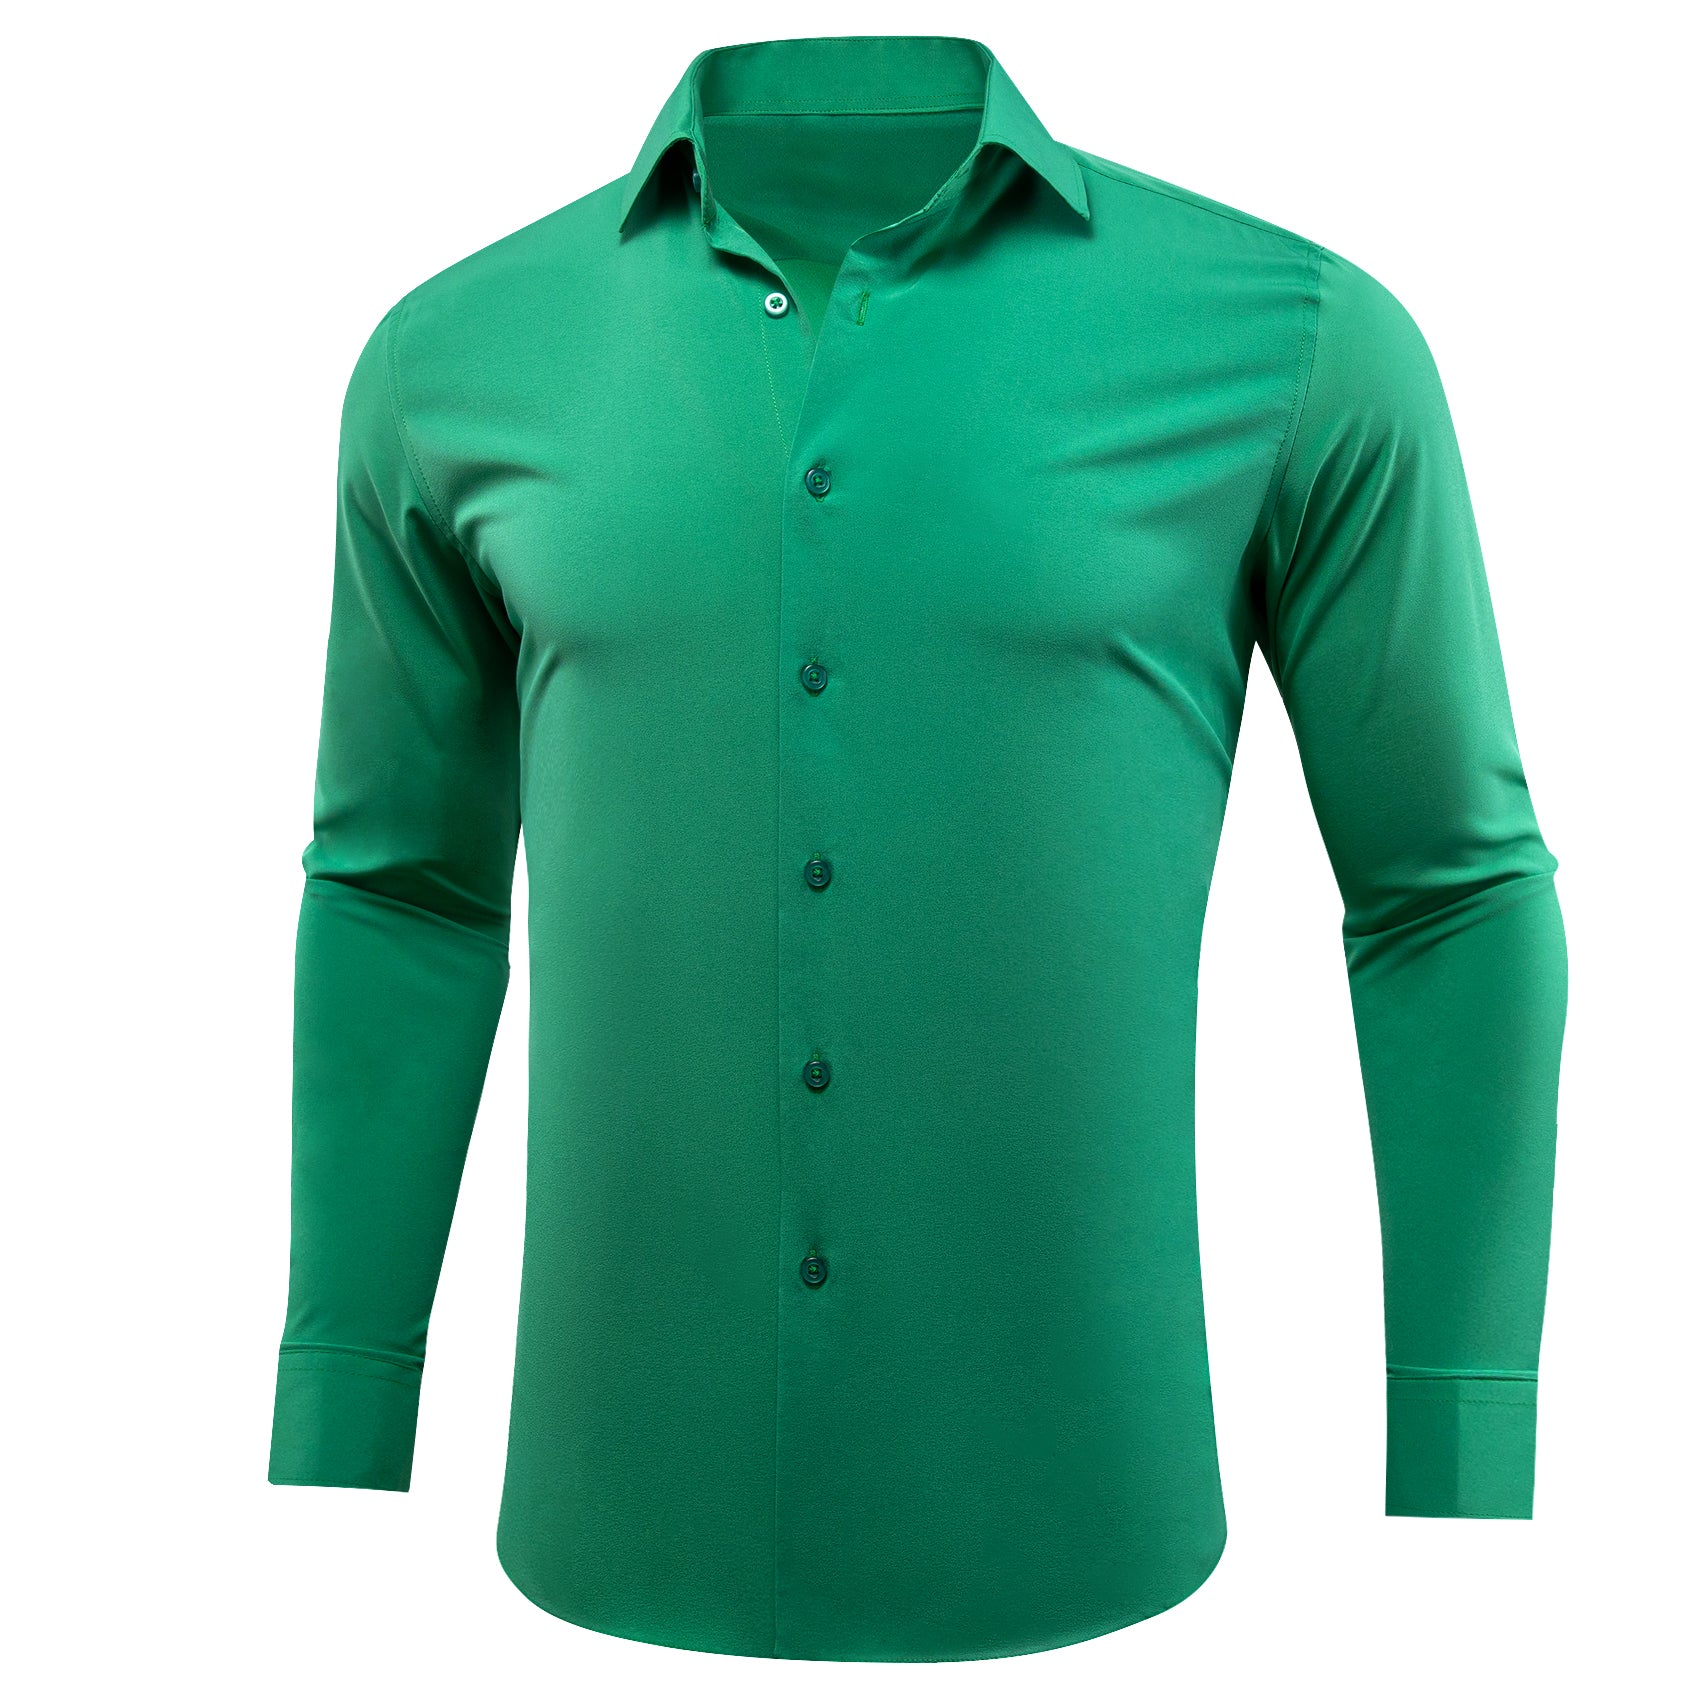 Barry.wang Seagreen Solid Silk Shirt